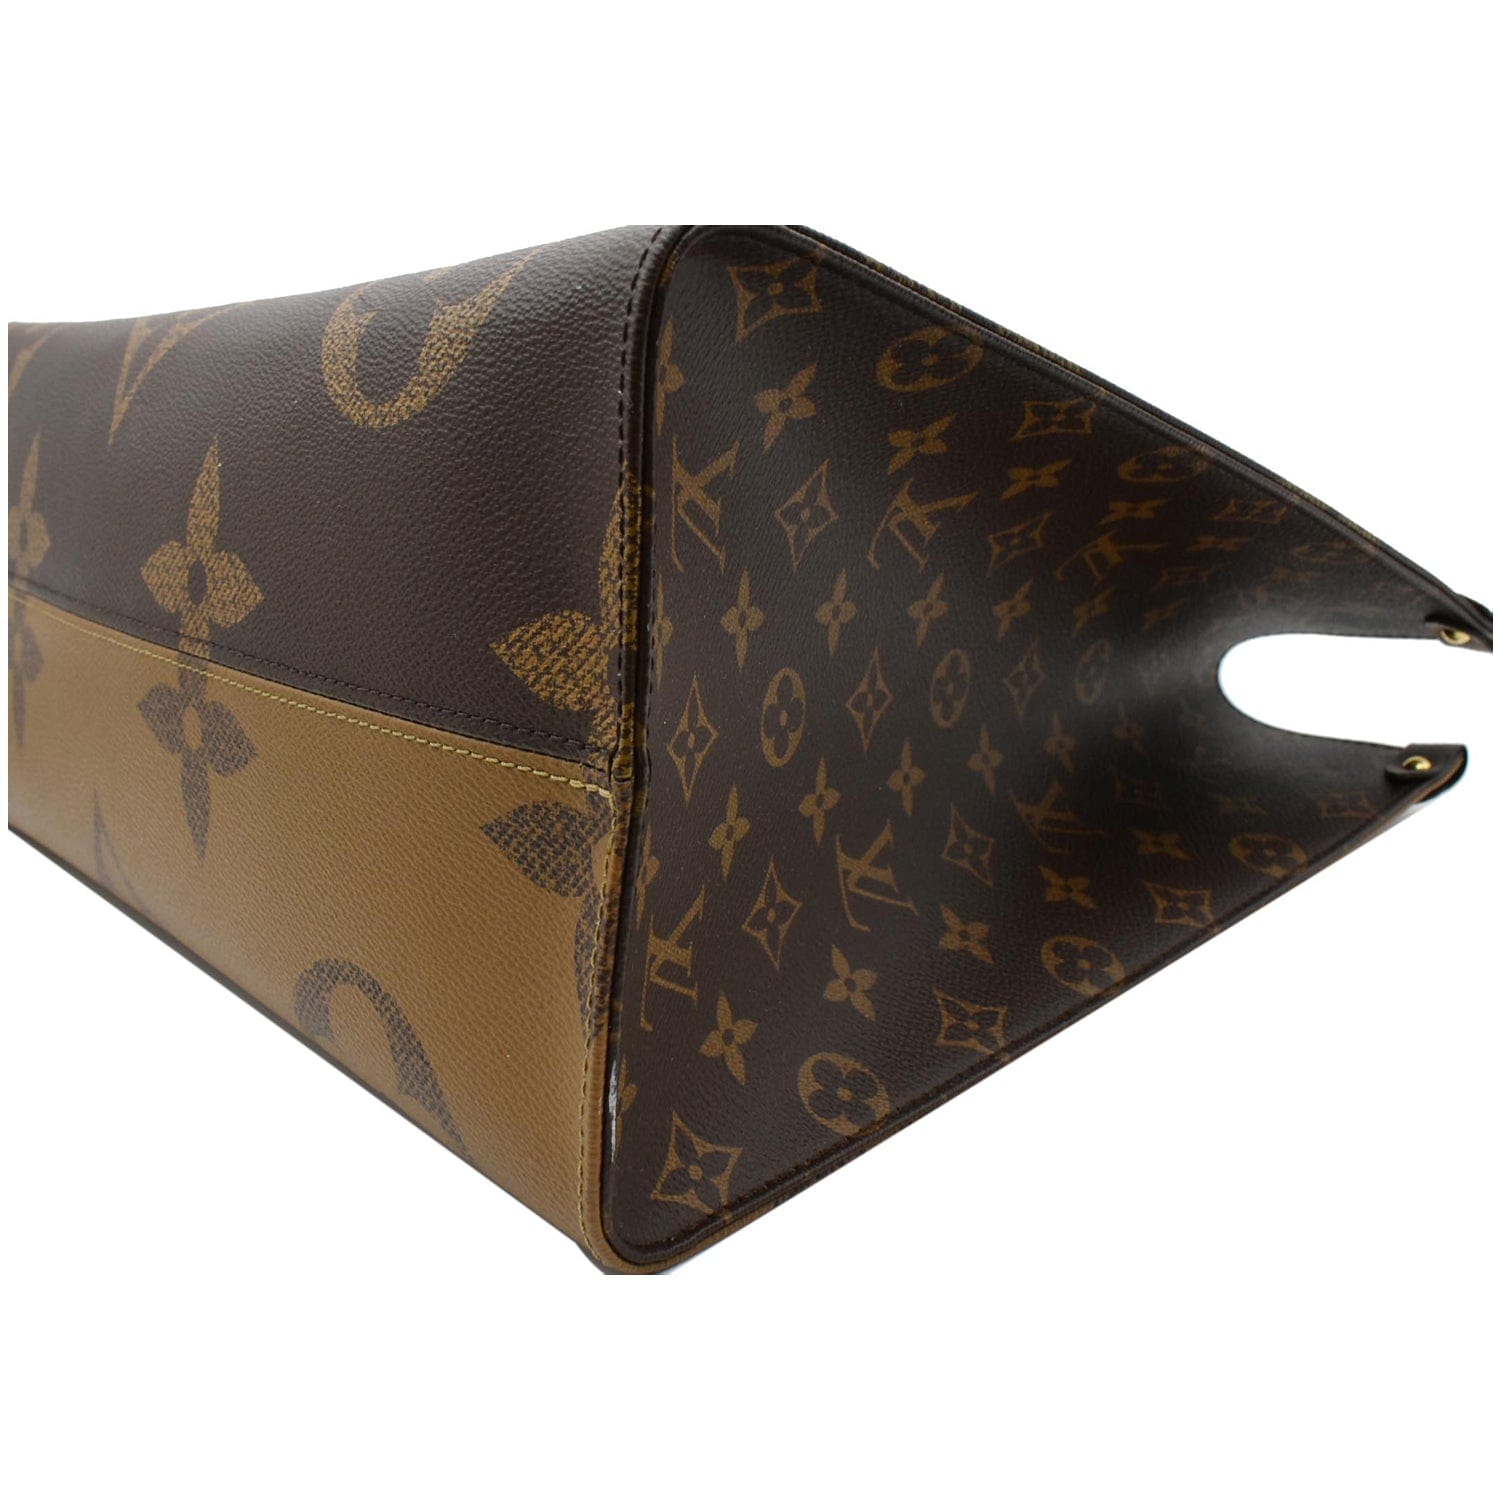 Louis Vuitton Monogram Giant Handbag